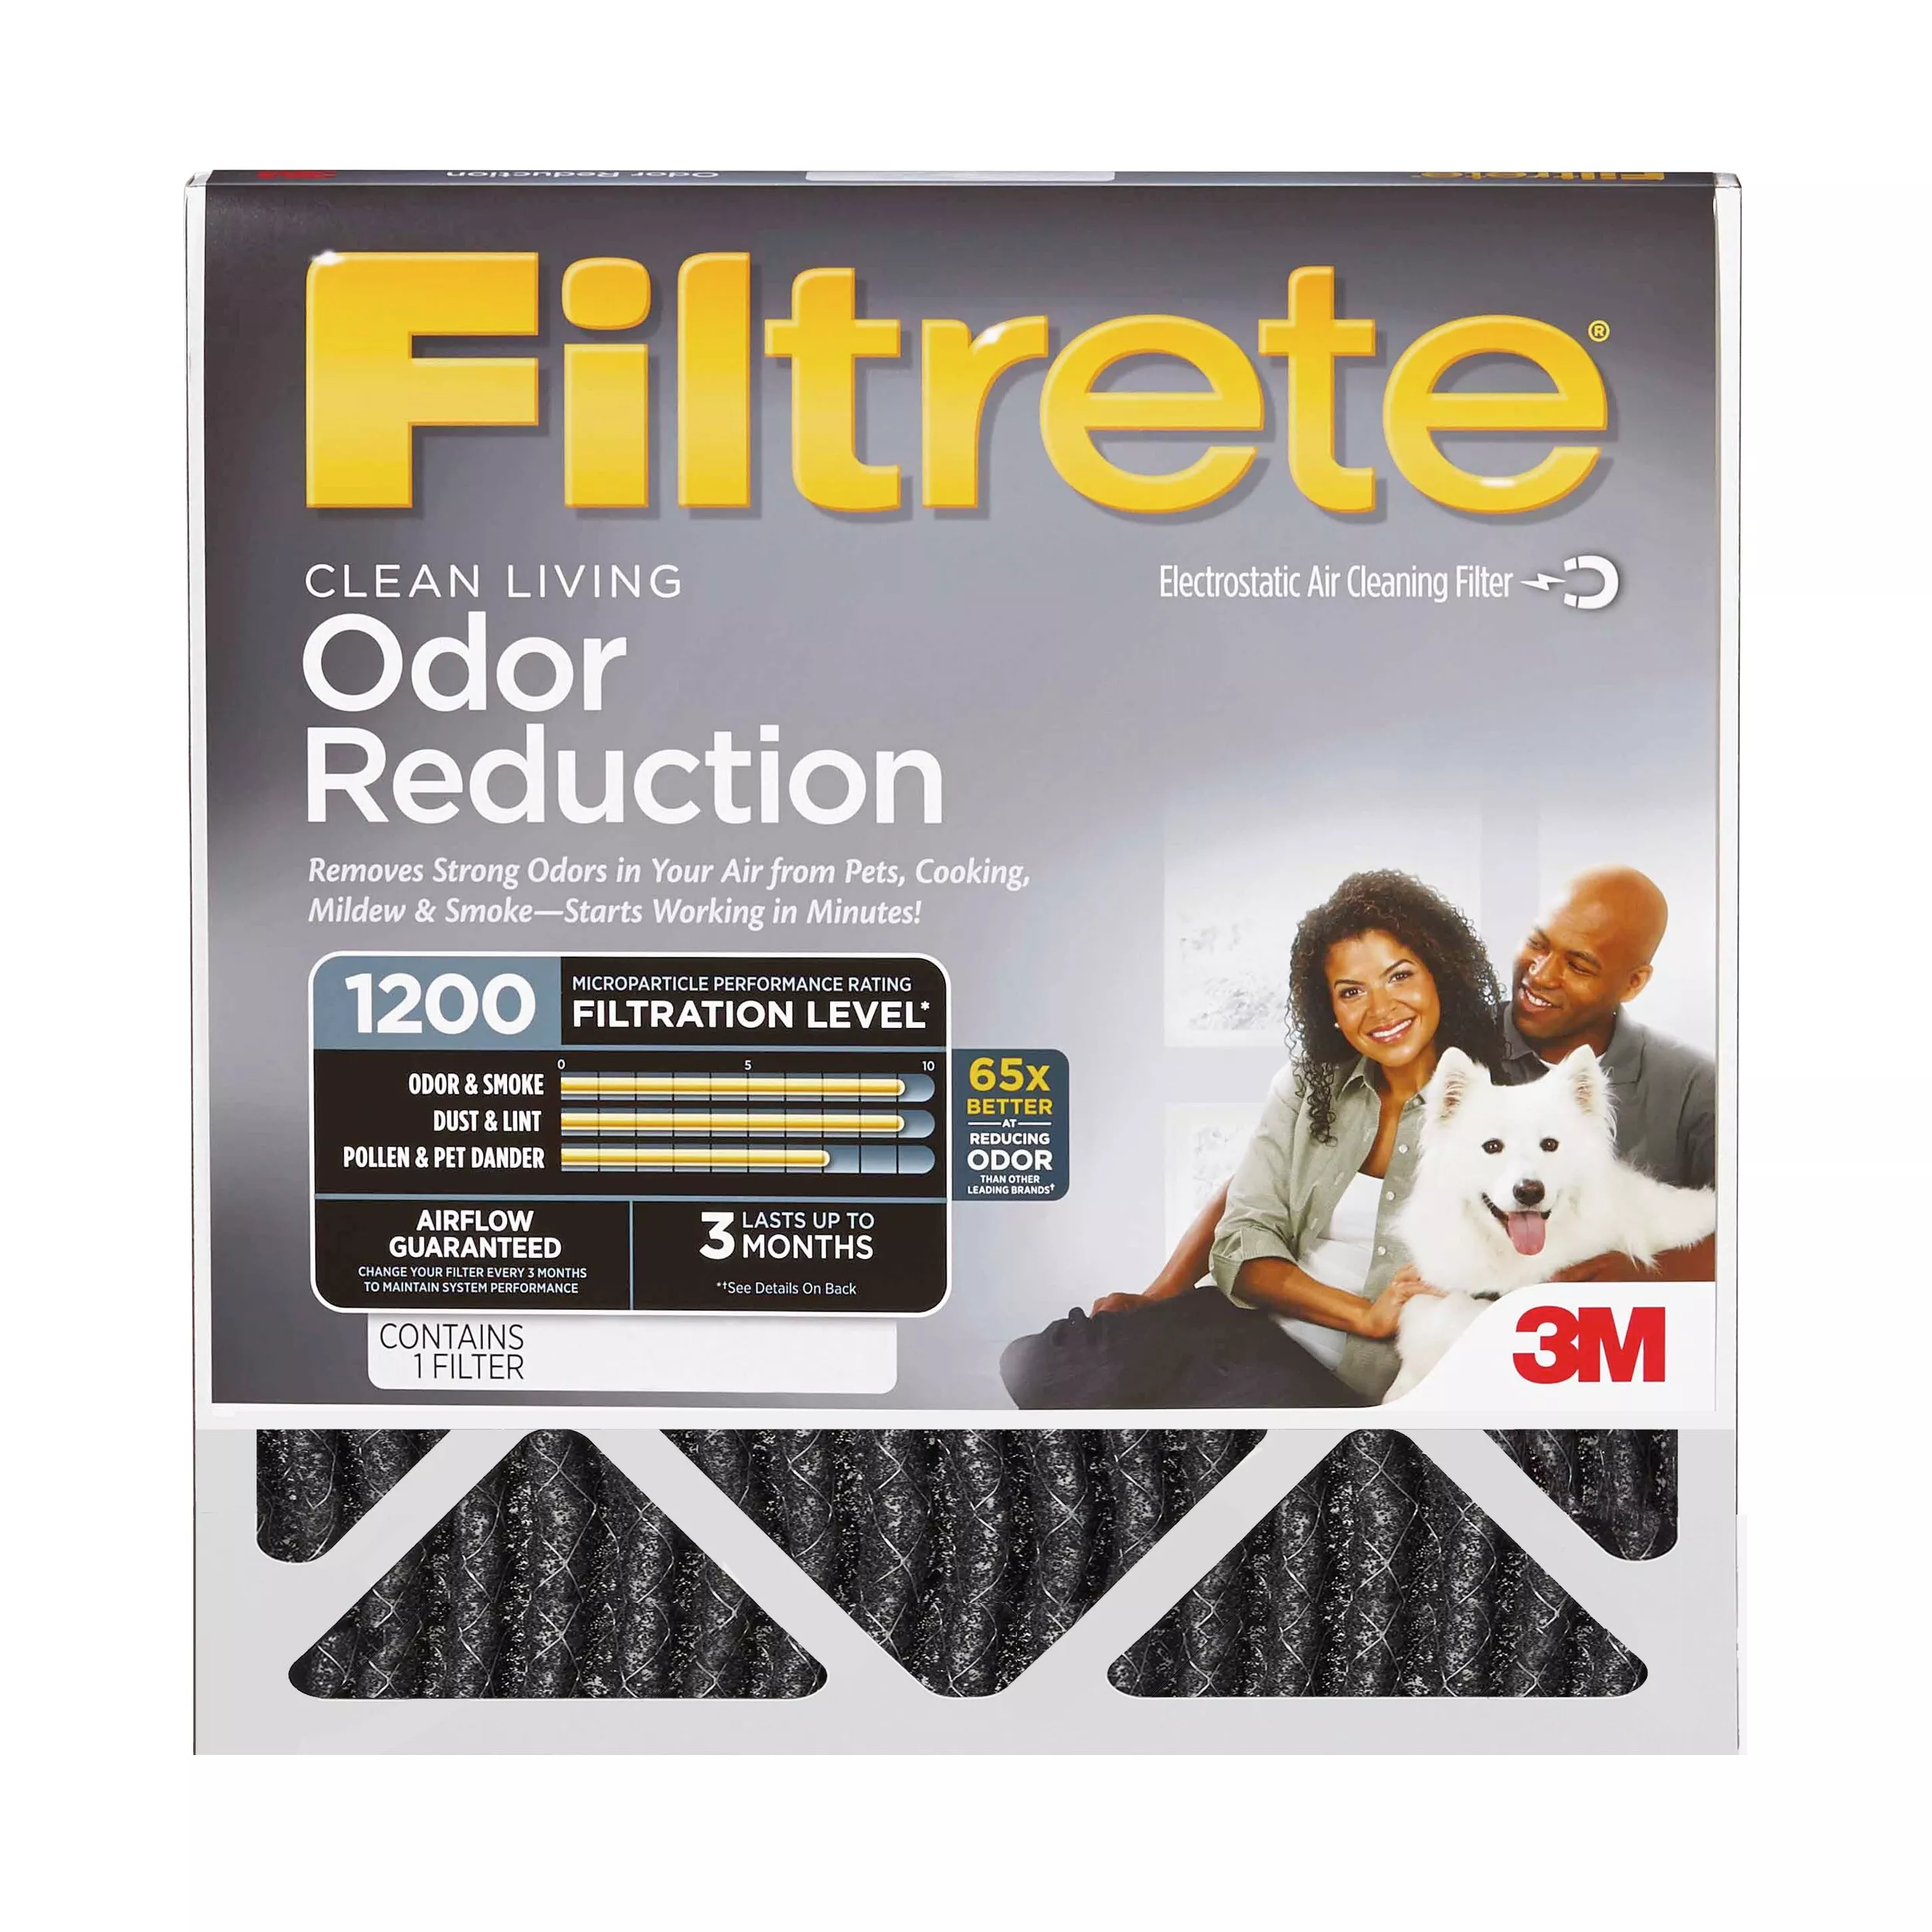 Filtrete™ Home Odor Reduction Filter HOME02-4, 20 in x 20 in x 1 in
(50,8 cm x 50,8 cm x 2,5 cm)